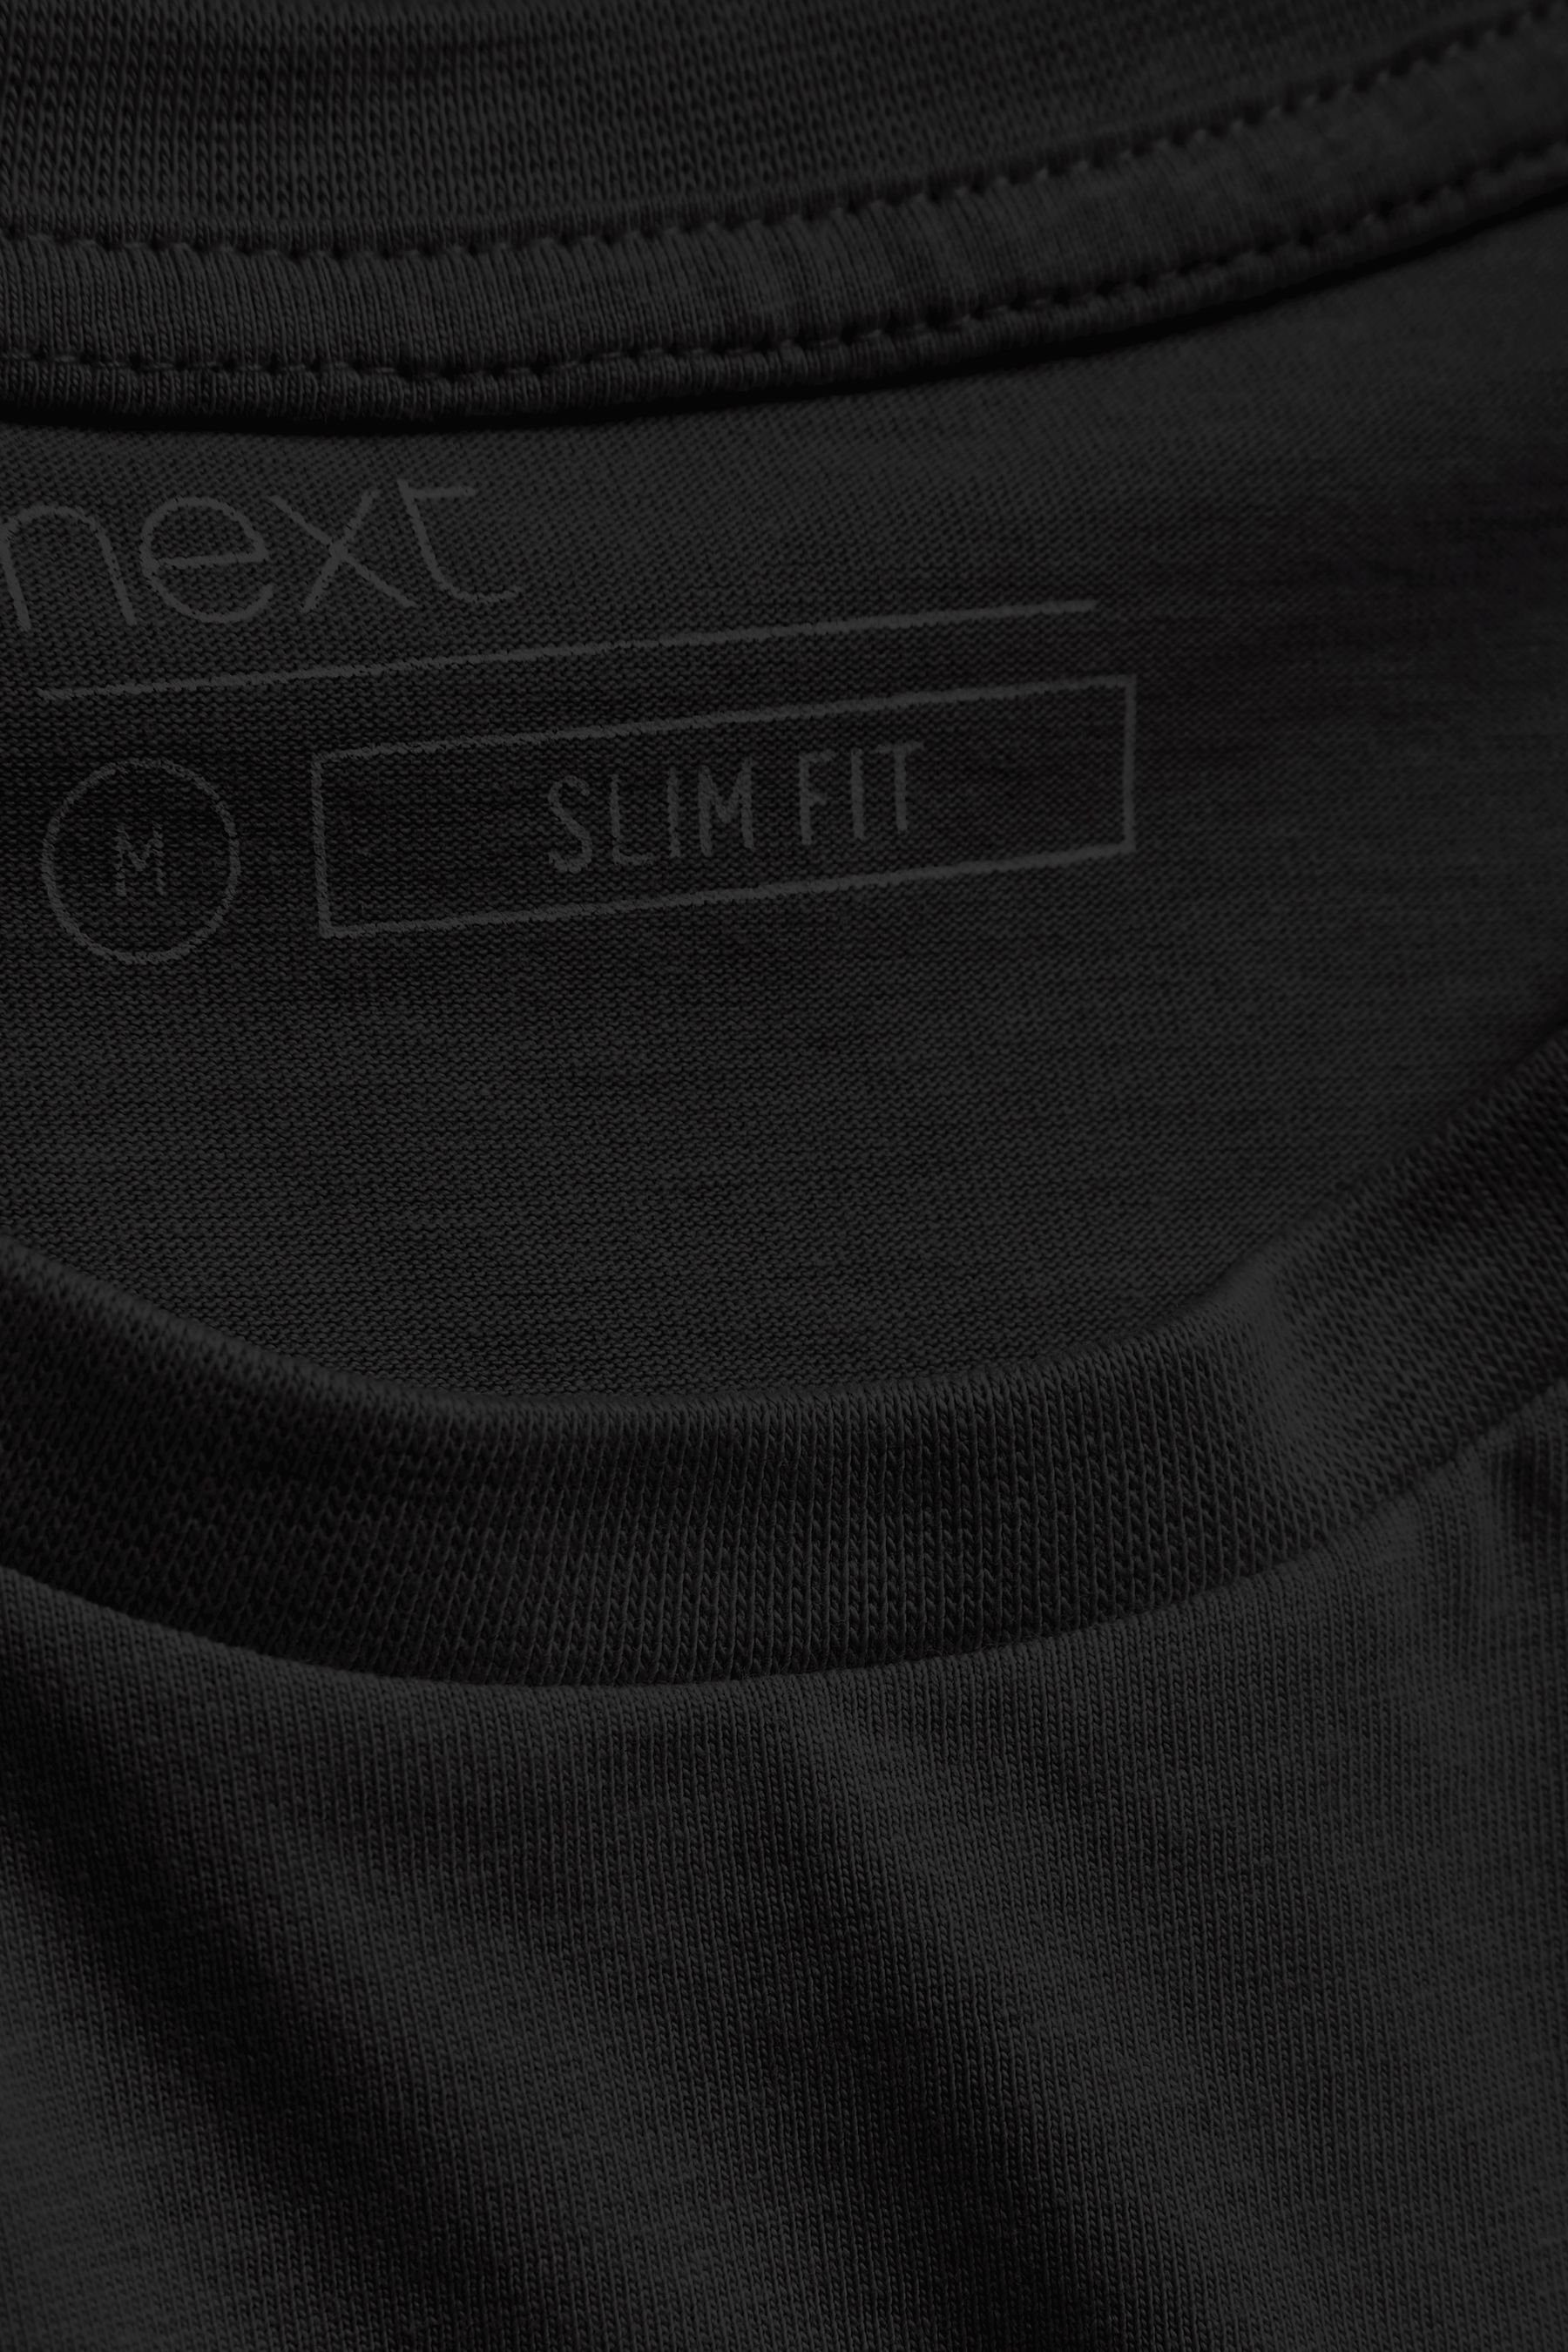 (1-tlg) Next Black T-Shirt